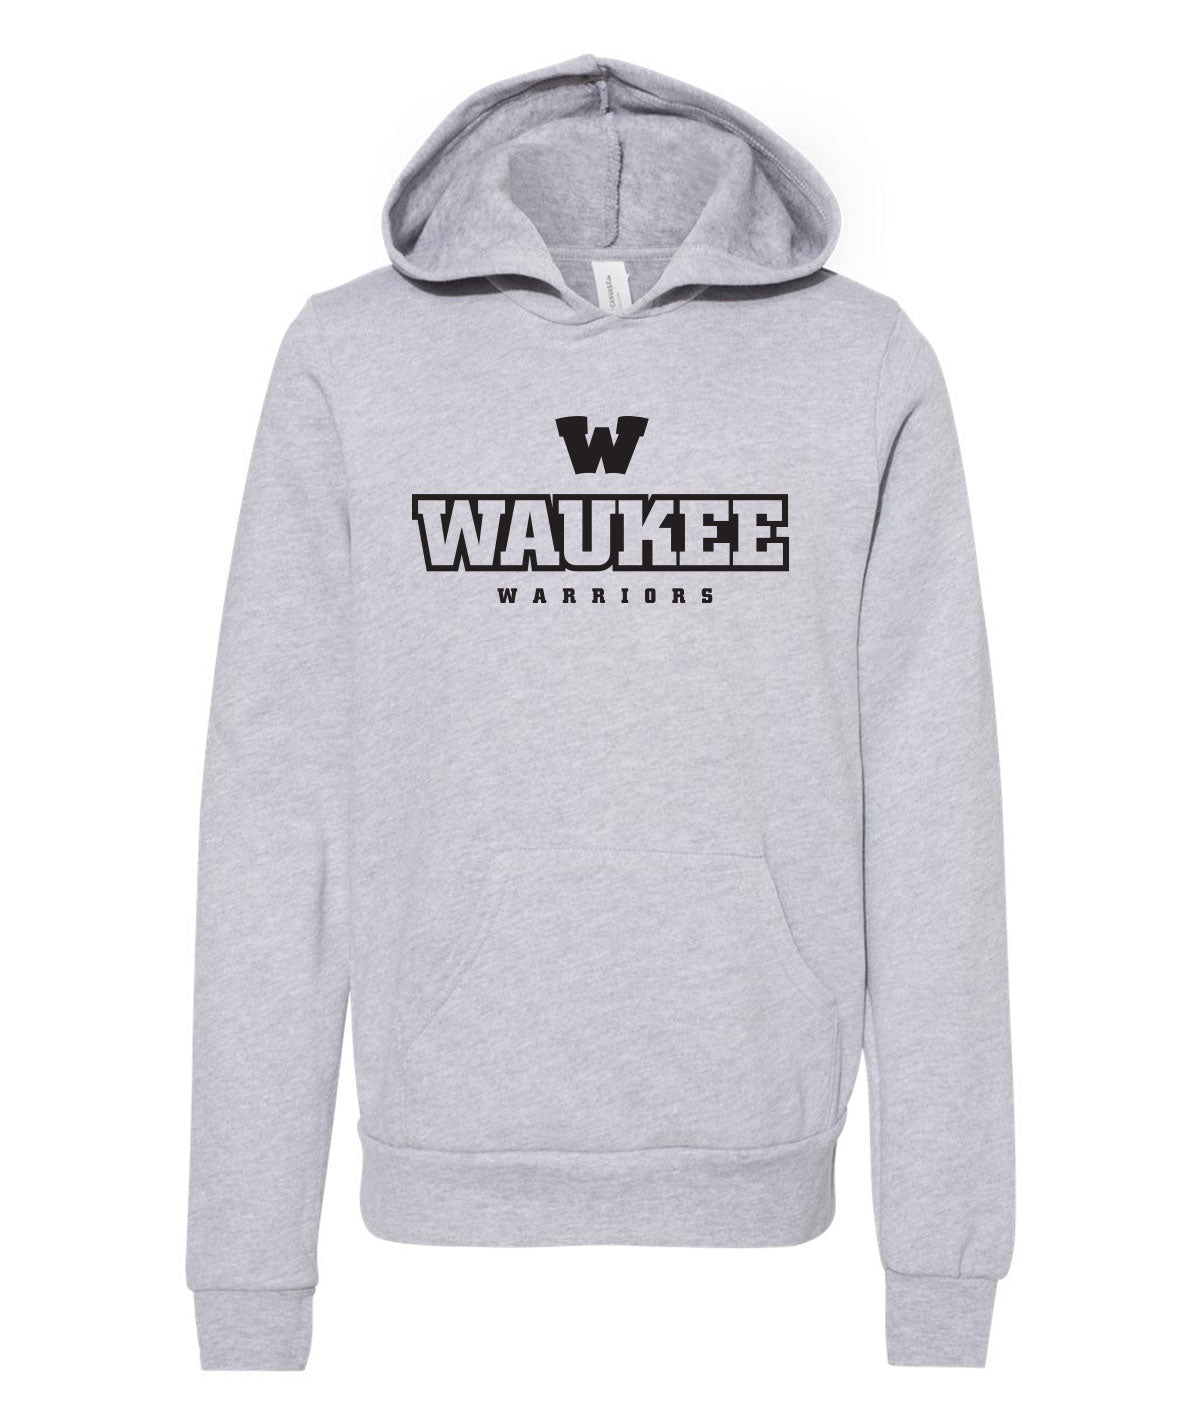 Waukee Warriors Youth Soft Hooded Sweatshirt